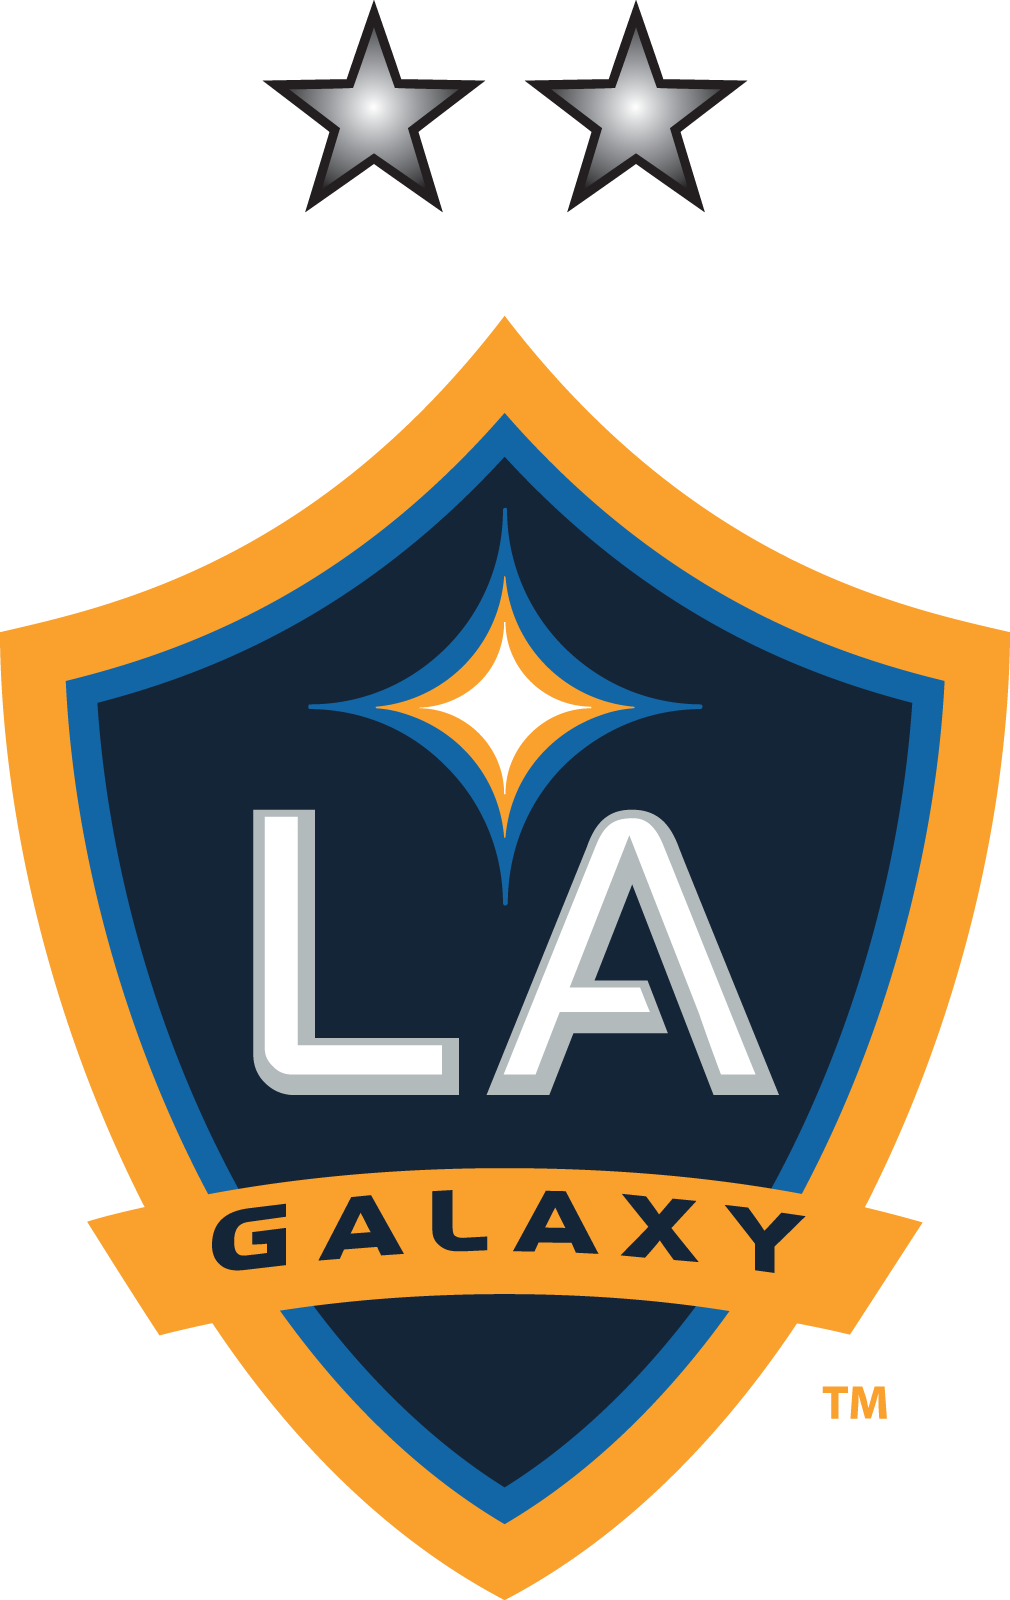 La Galaxy Logo - Angeles Galaxy (1010x1600), Png Download